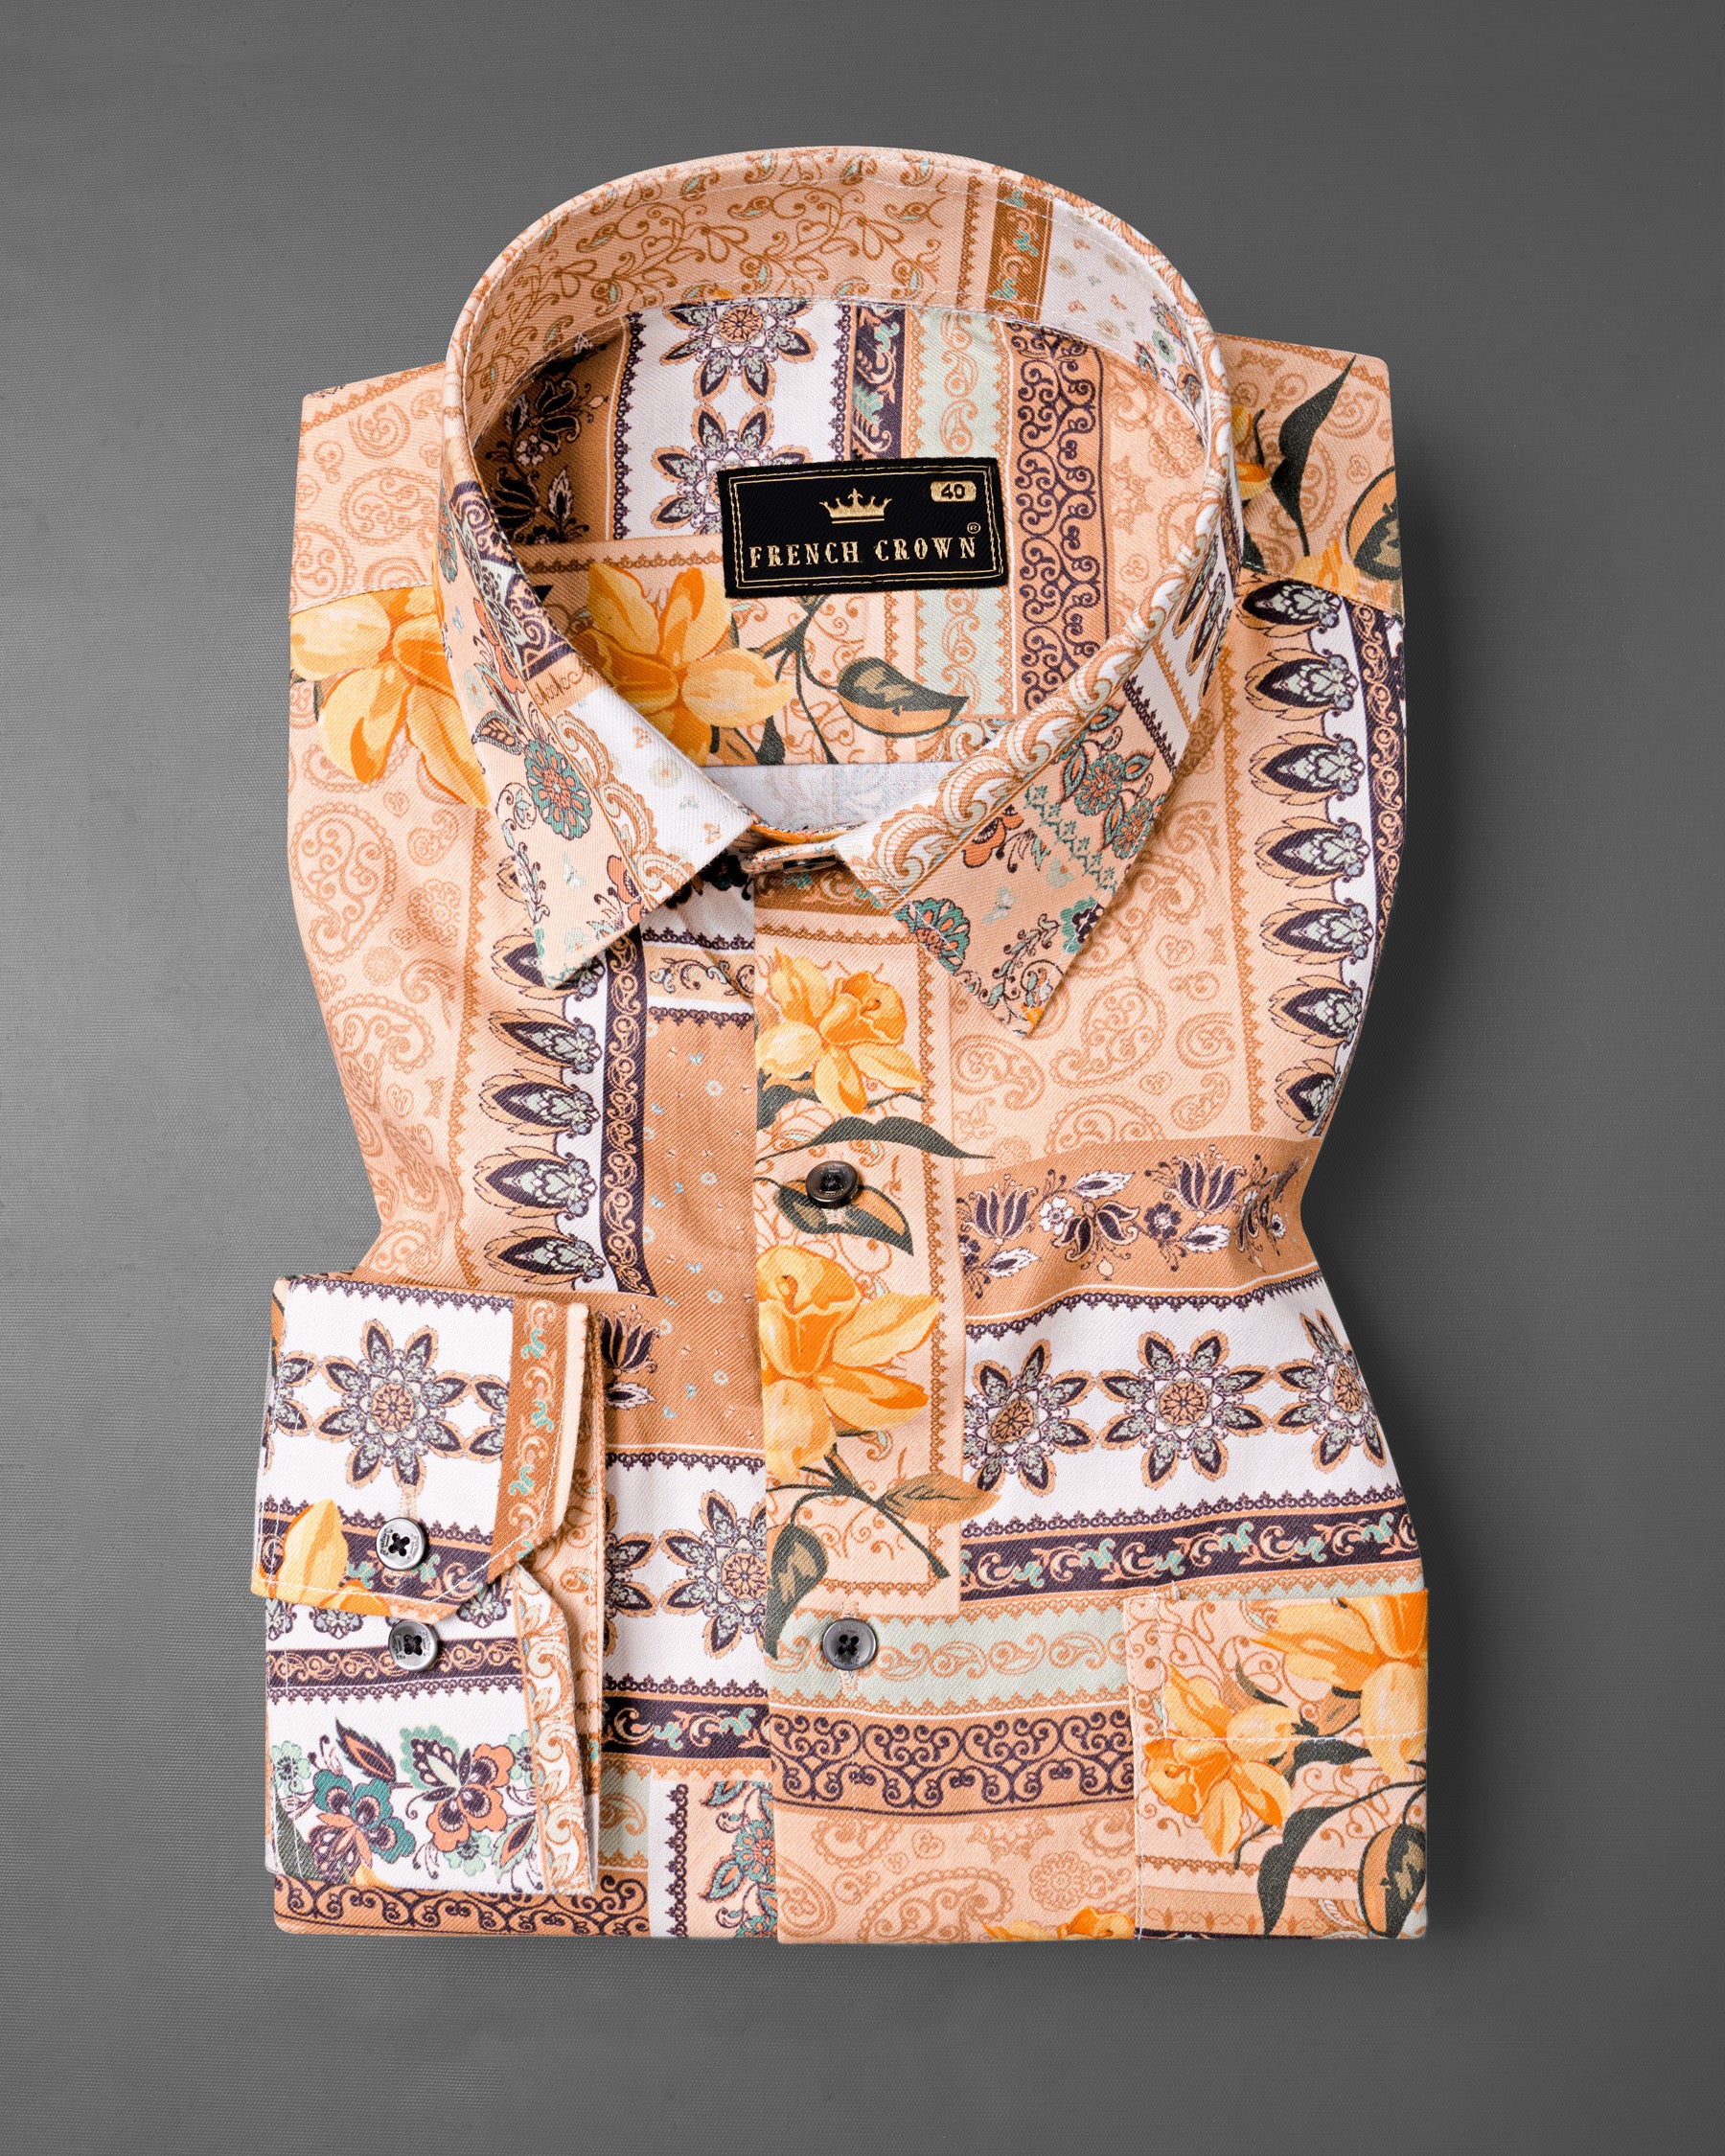 Tan Sandstone Multicolour Unique Floral Printed Twill Textured Premium Cotton Shirt